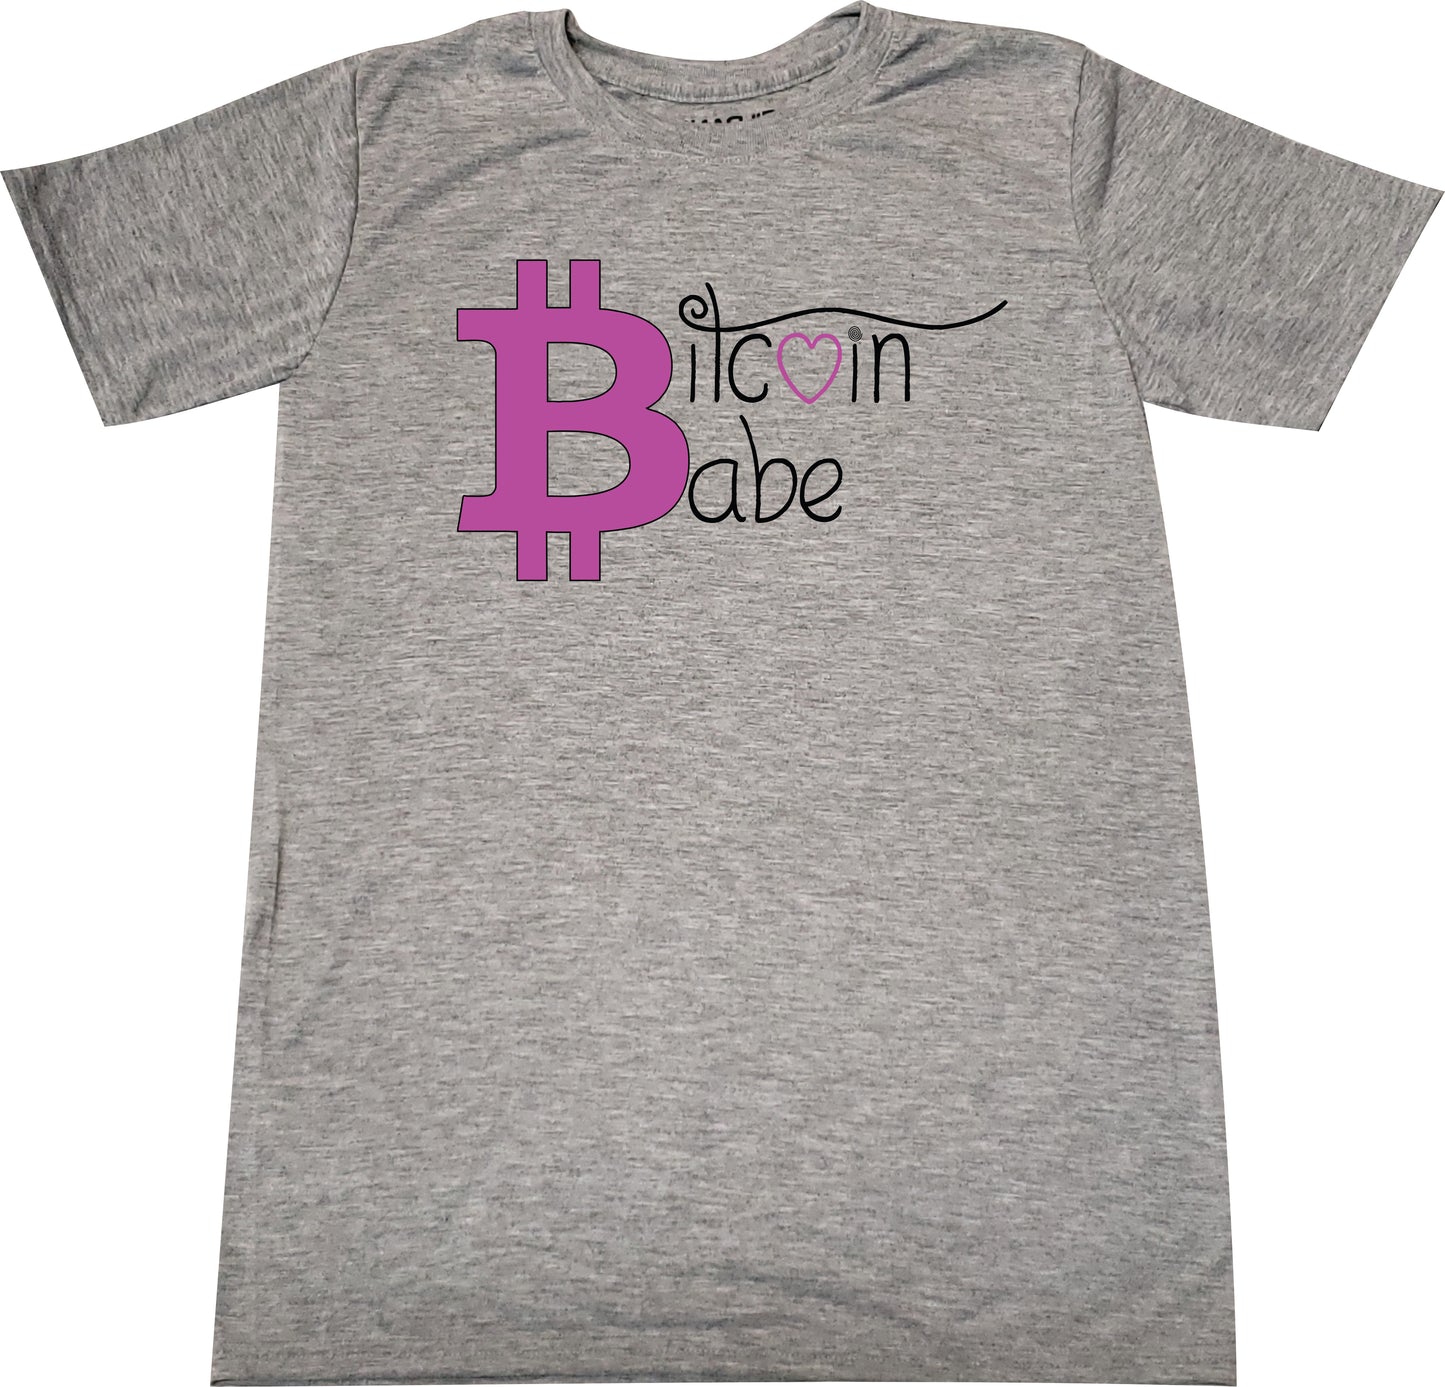 Bitcoin Babe tshirt